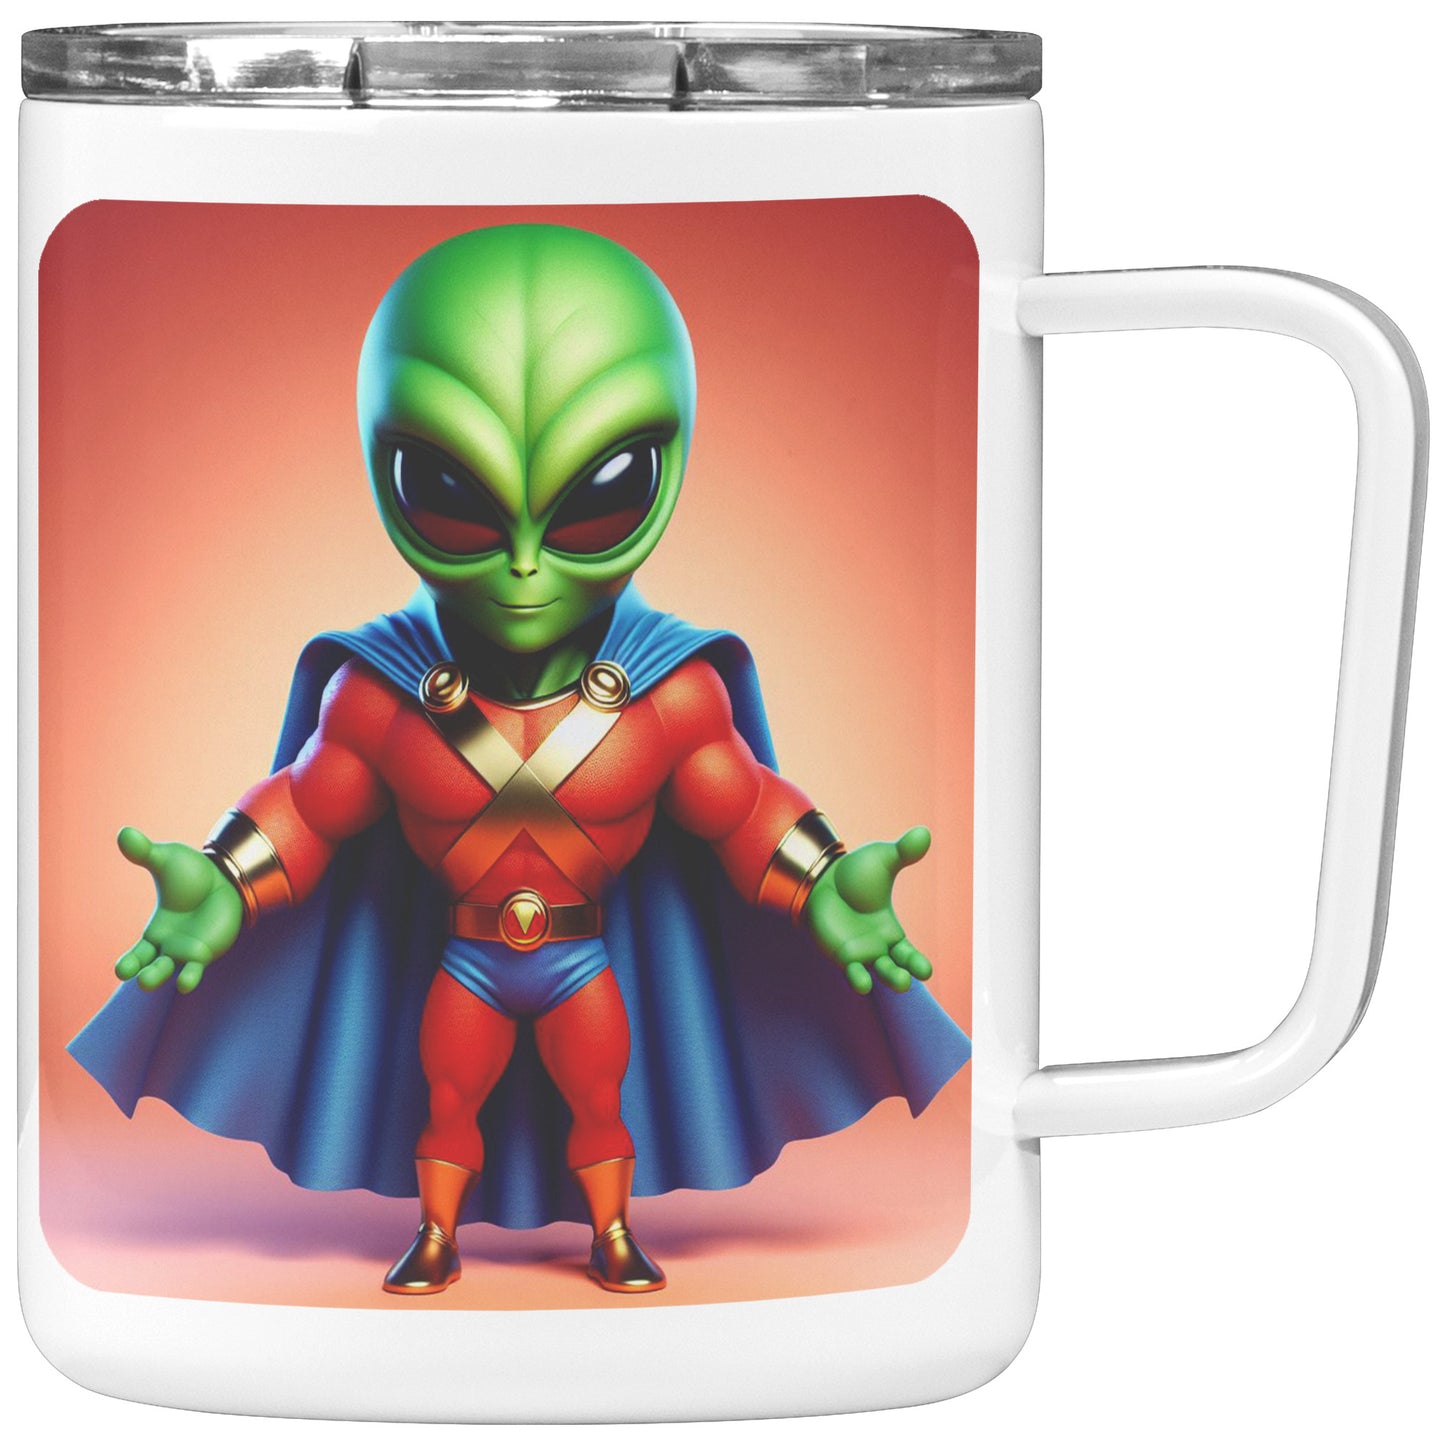 Martian Alien Caricature - Coffee Mug #17